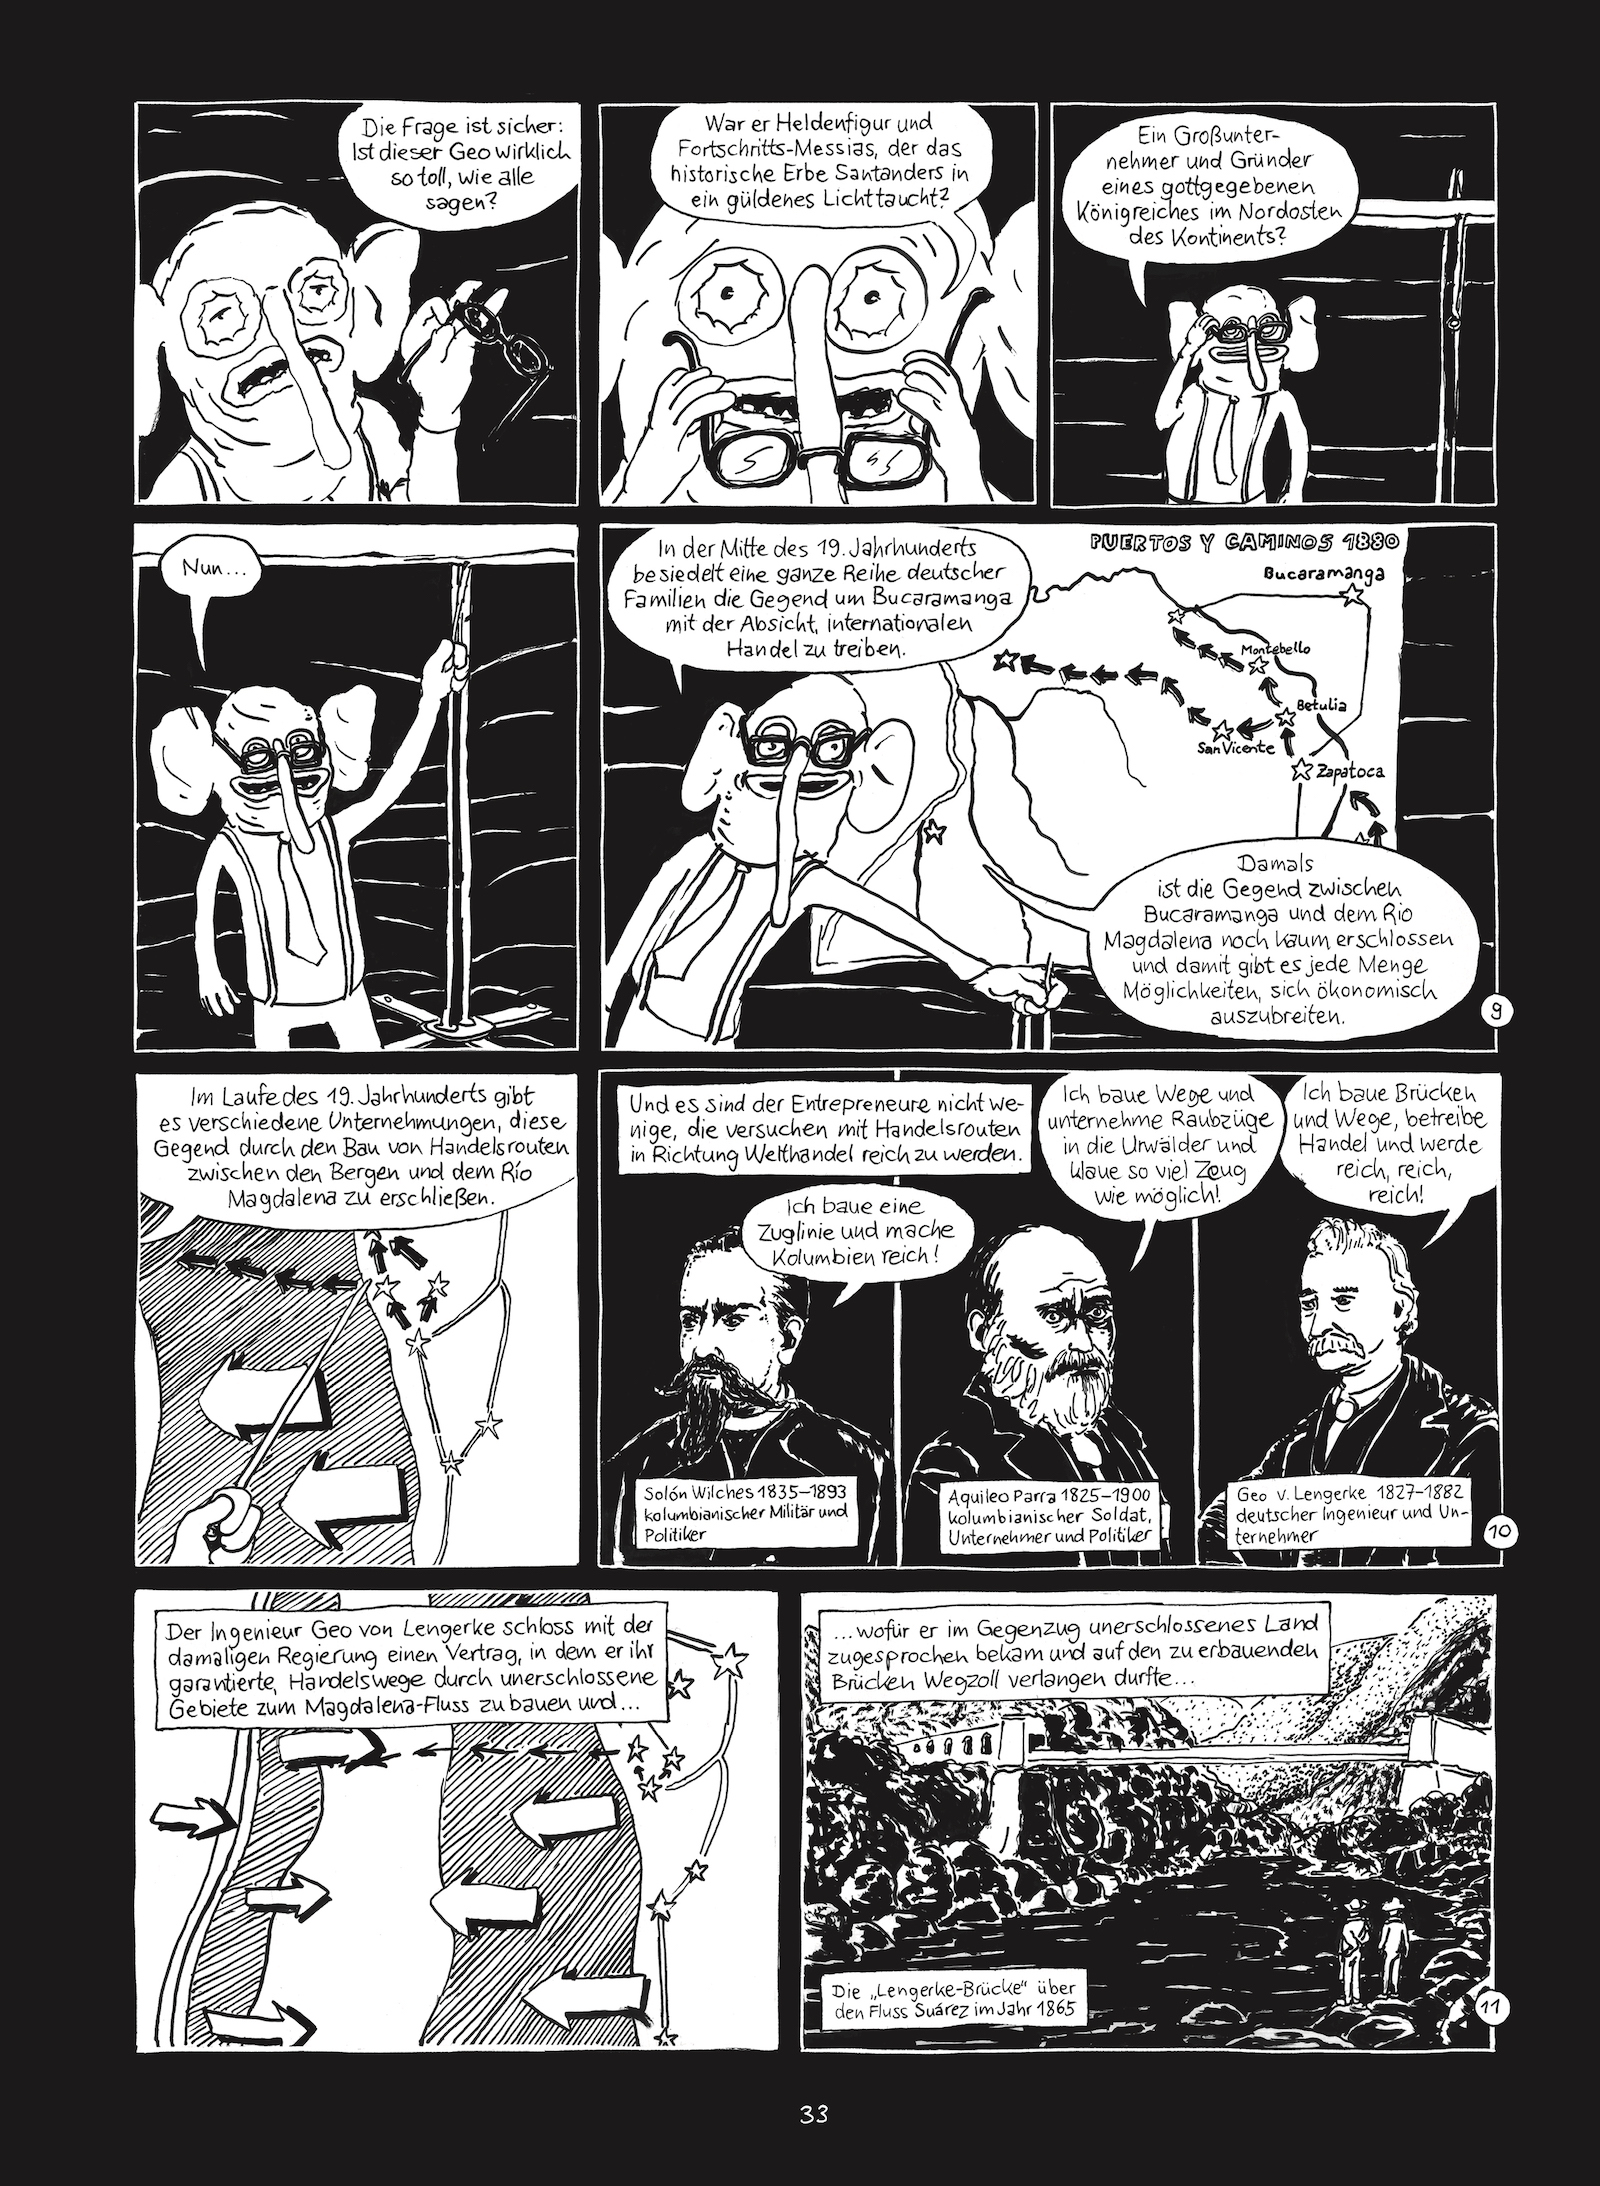 Seite 33 aus Diaz Orejarenas Comic "Otras Rayas"